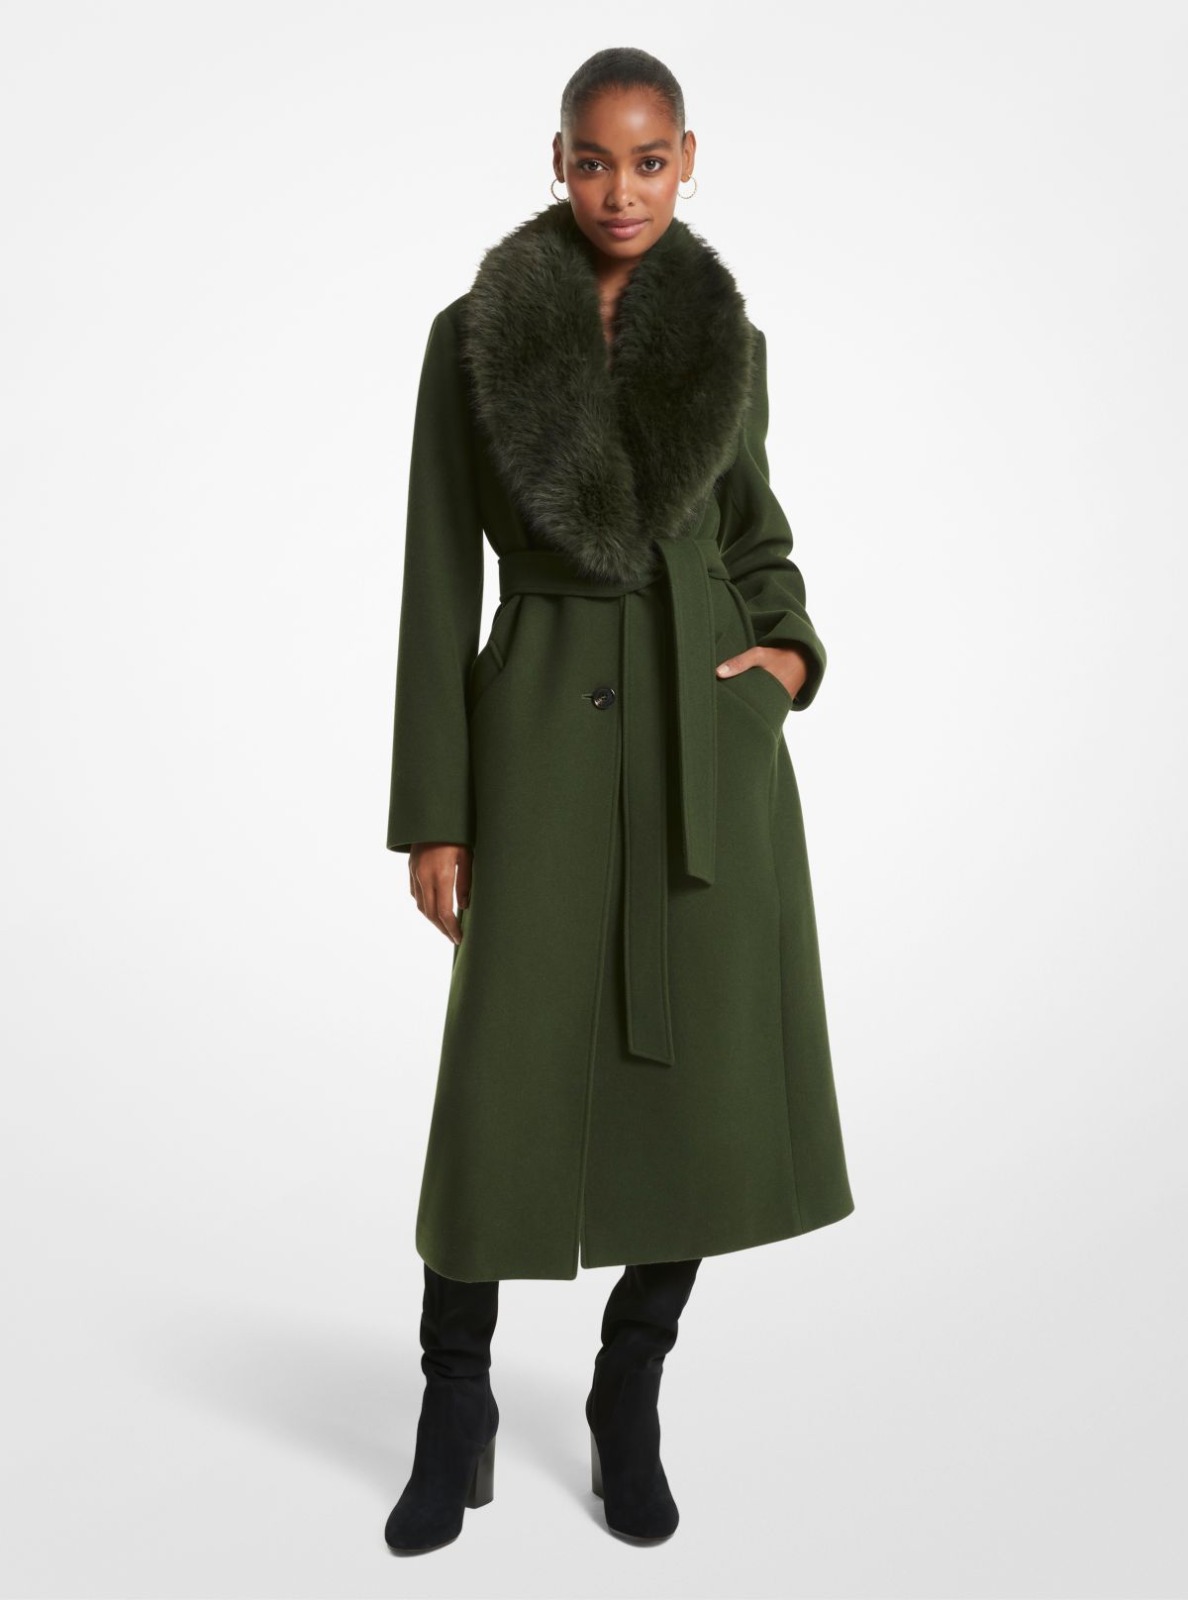 Michael Kors Woman Coat Green GOOFASH